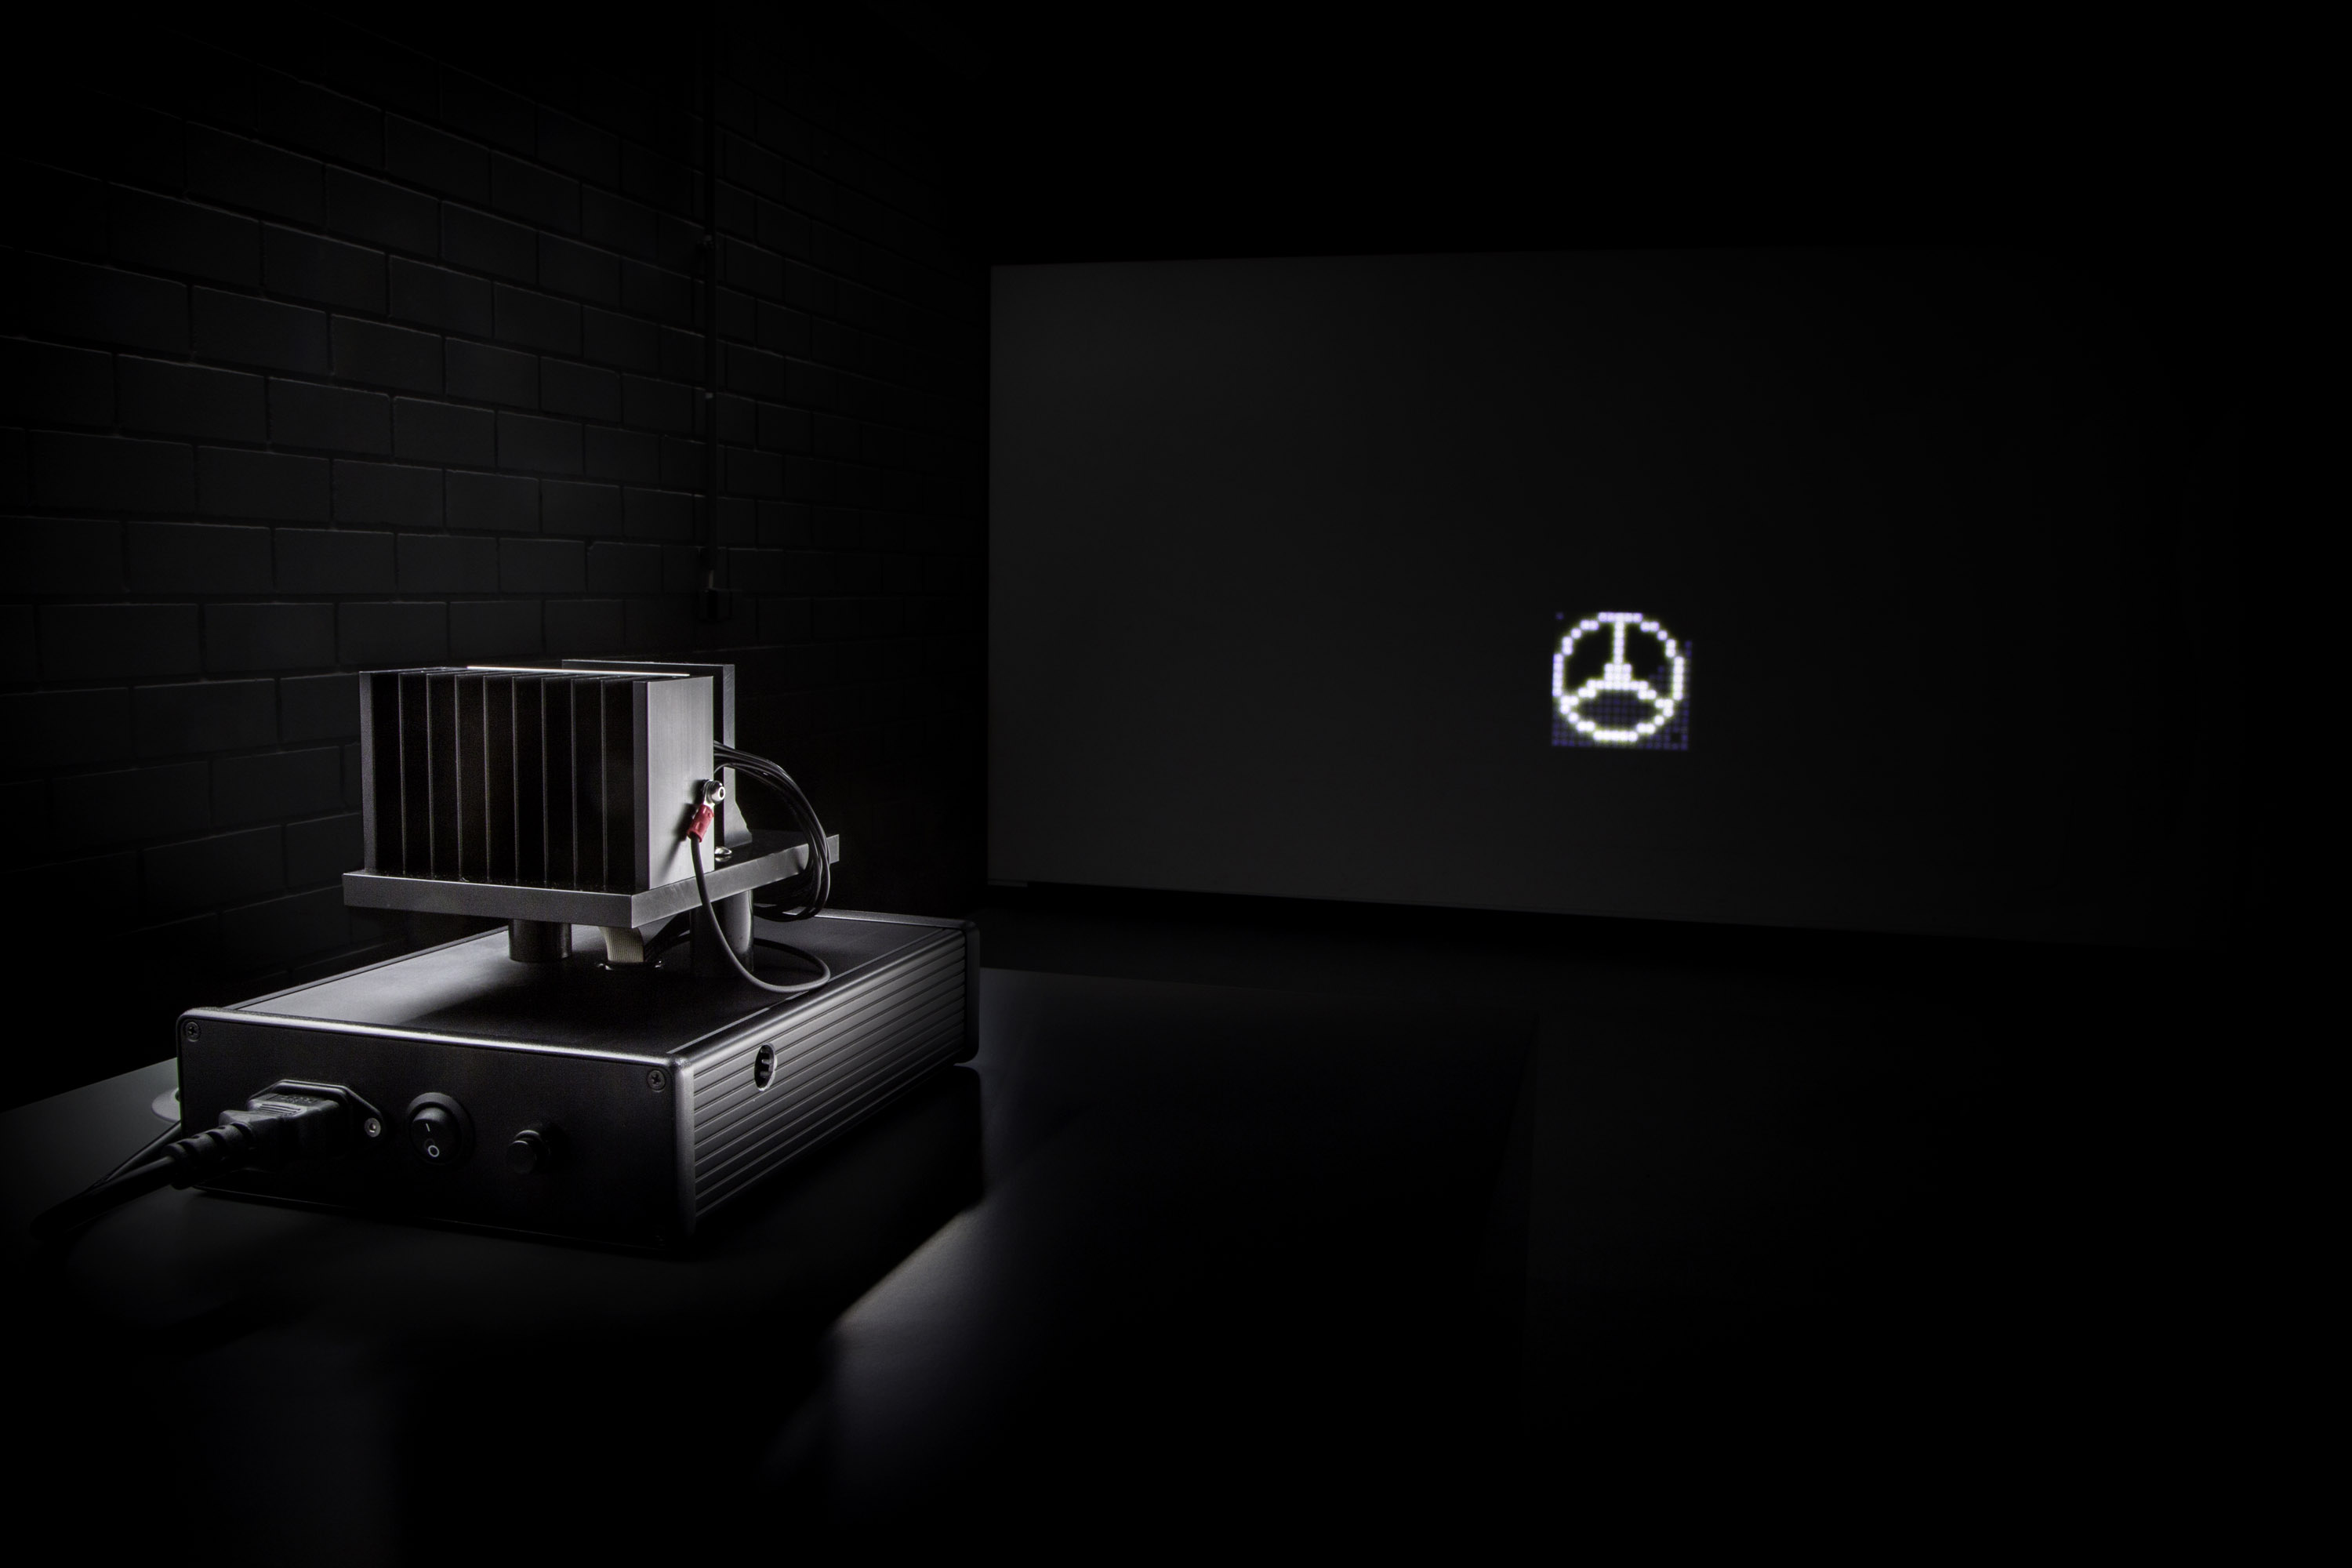 Mercedes-Benz MULTIBEAM LED headlamps